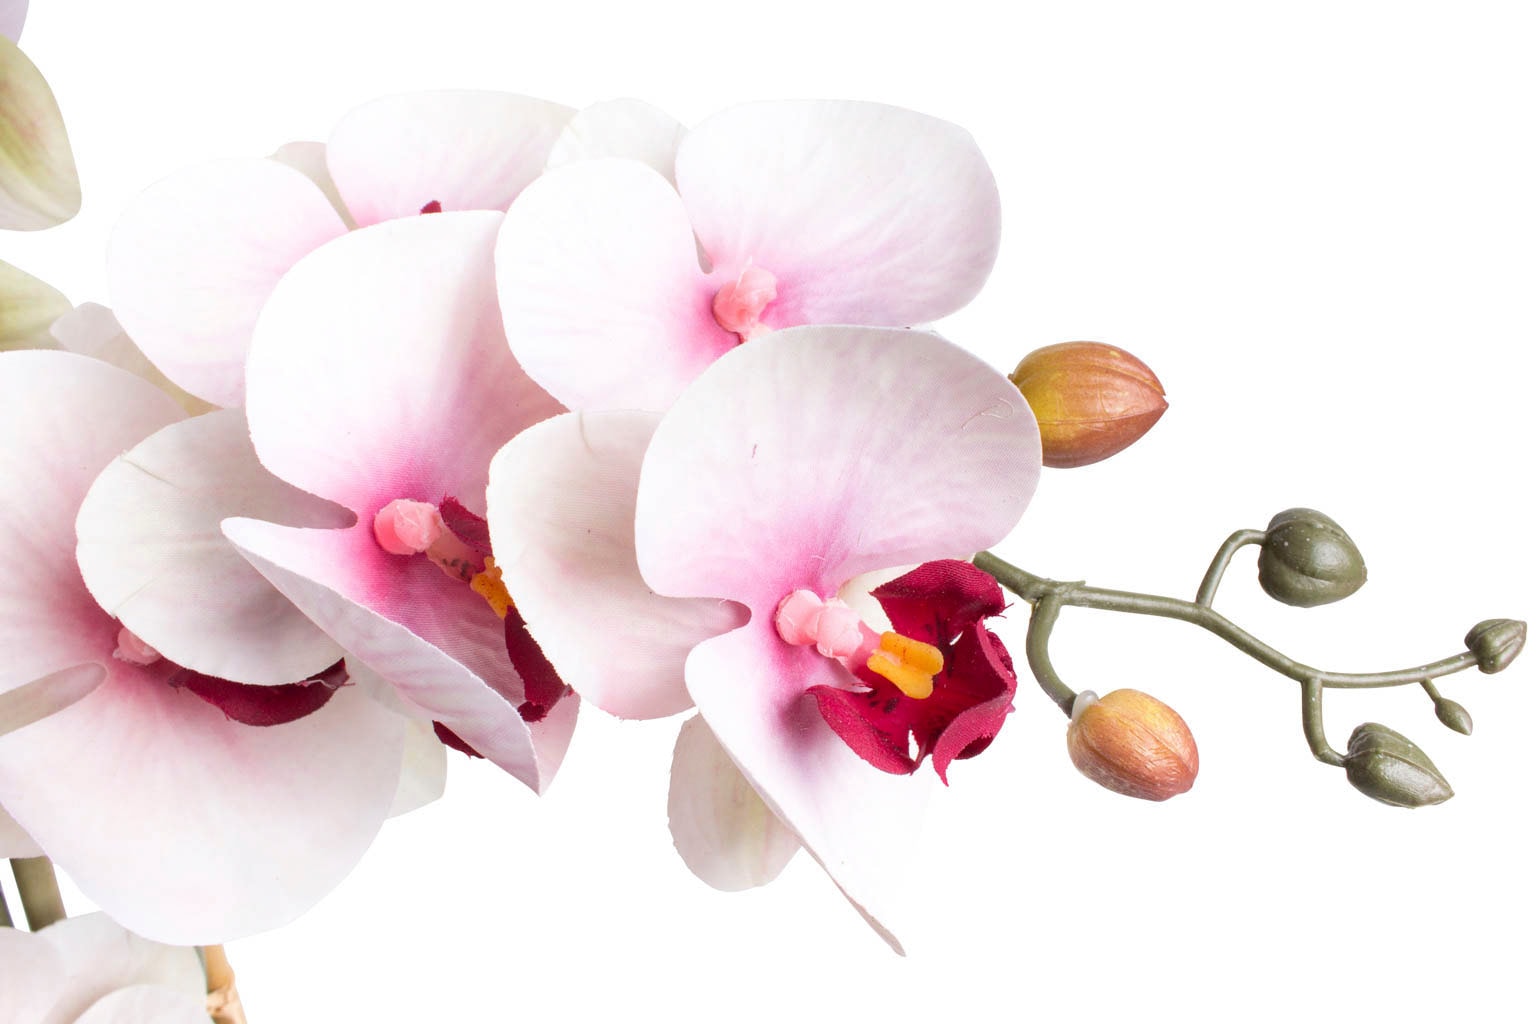 Botanic-Haus Kunstorchidee »Orchidee Bora«, (1 St.) im OTTO Online Shop